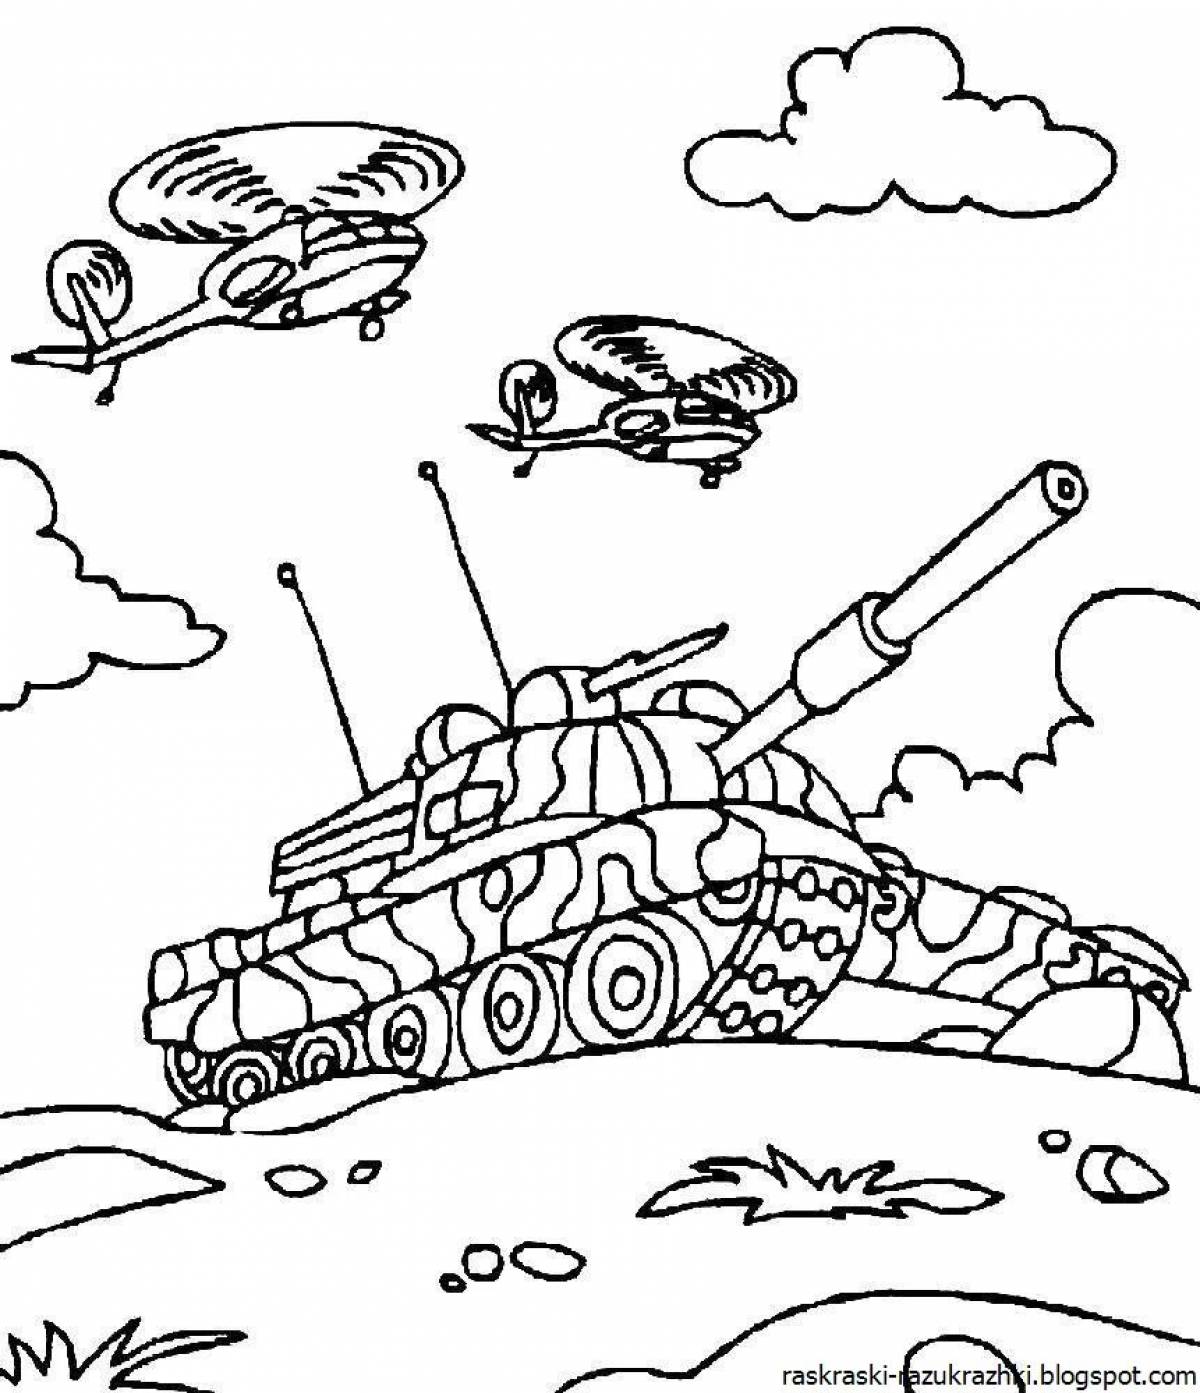 Забавная военная раскраска для детей